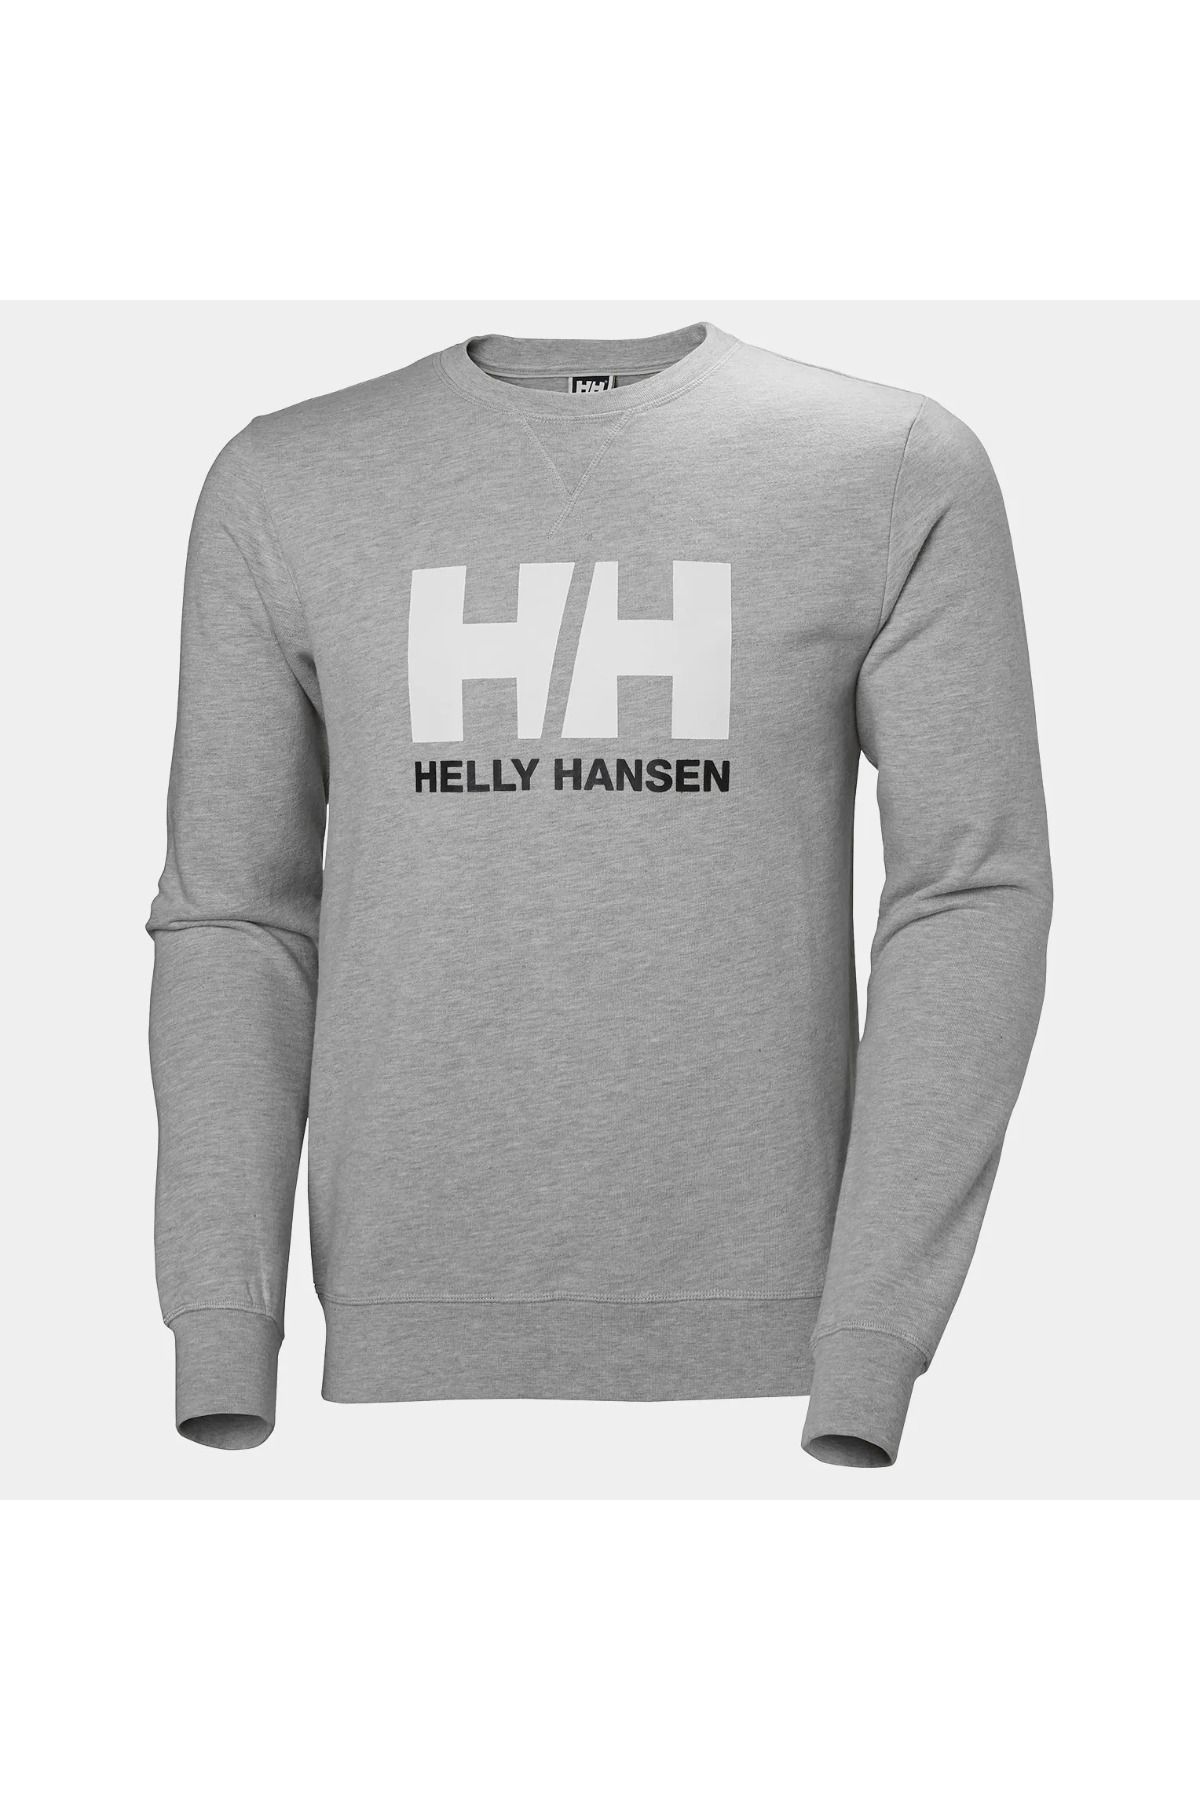 Helly Hansen Hh Logo Crew Erkek Gri Yuvarlak Yaka Tişört